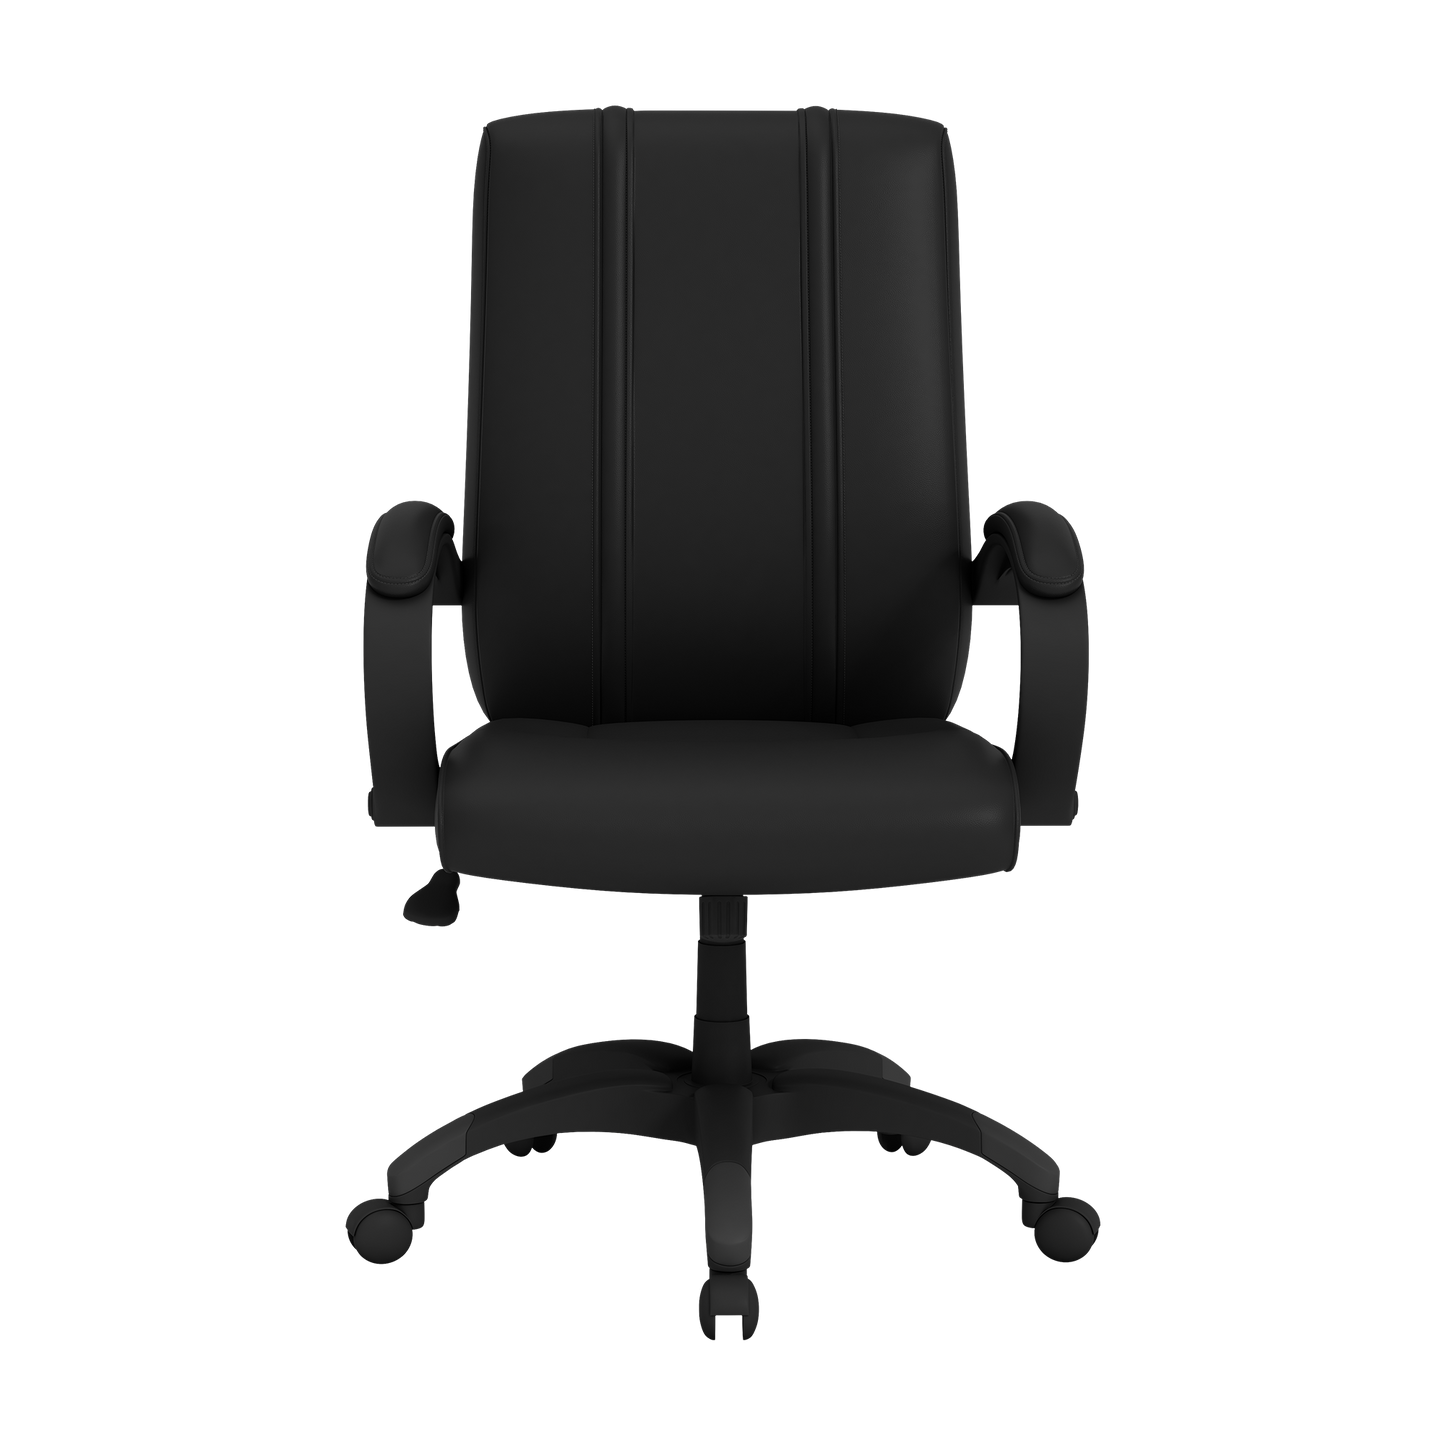 Office Chair 1000 with Utah Jazz Global Logo